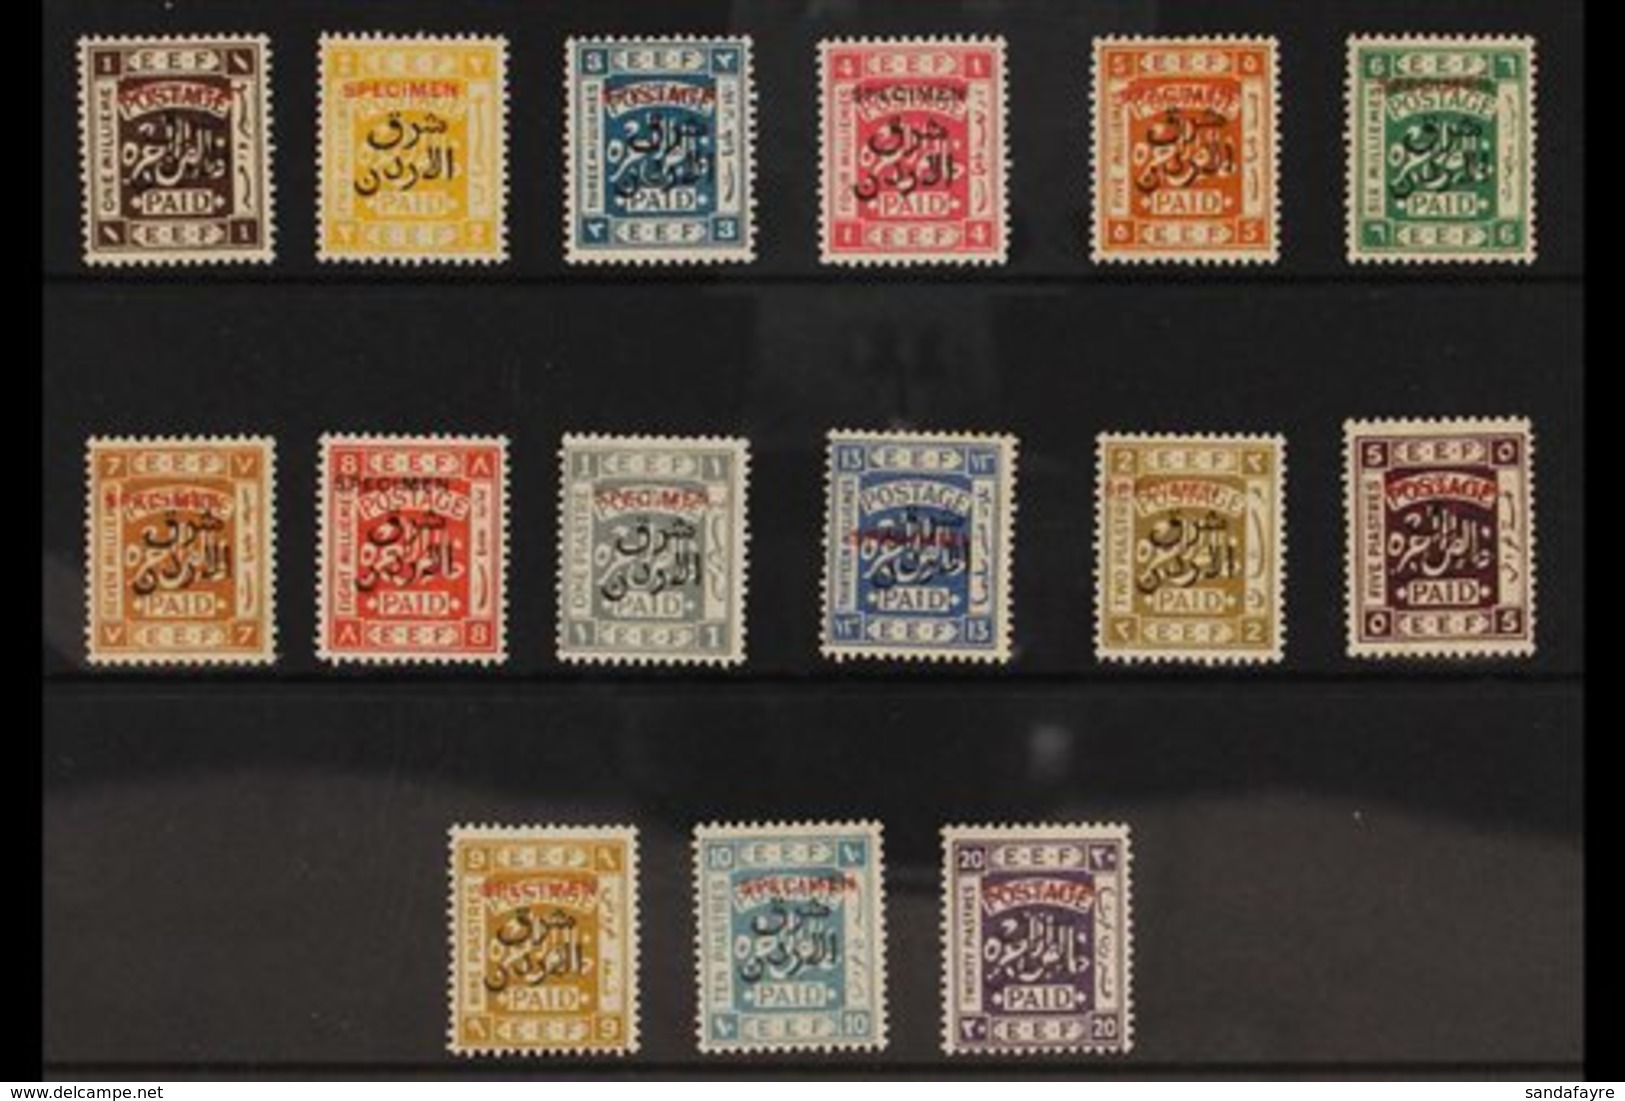 1925-26 "East Of The Jordan" Overprints On Palestine Overprinted "SPECIMEN" Complete Set, SG 143s/57s, Fine Mint, Fresh  - Jordania